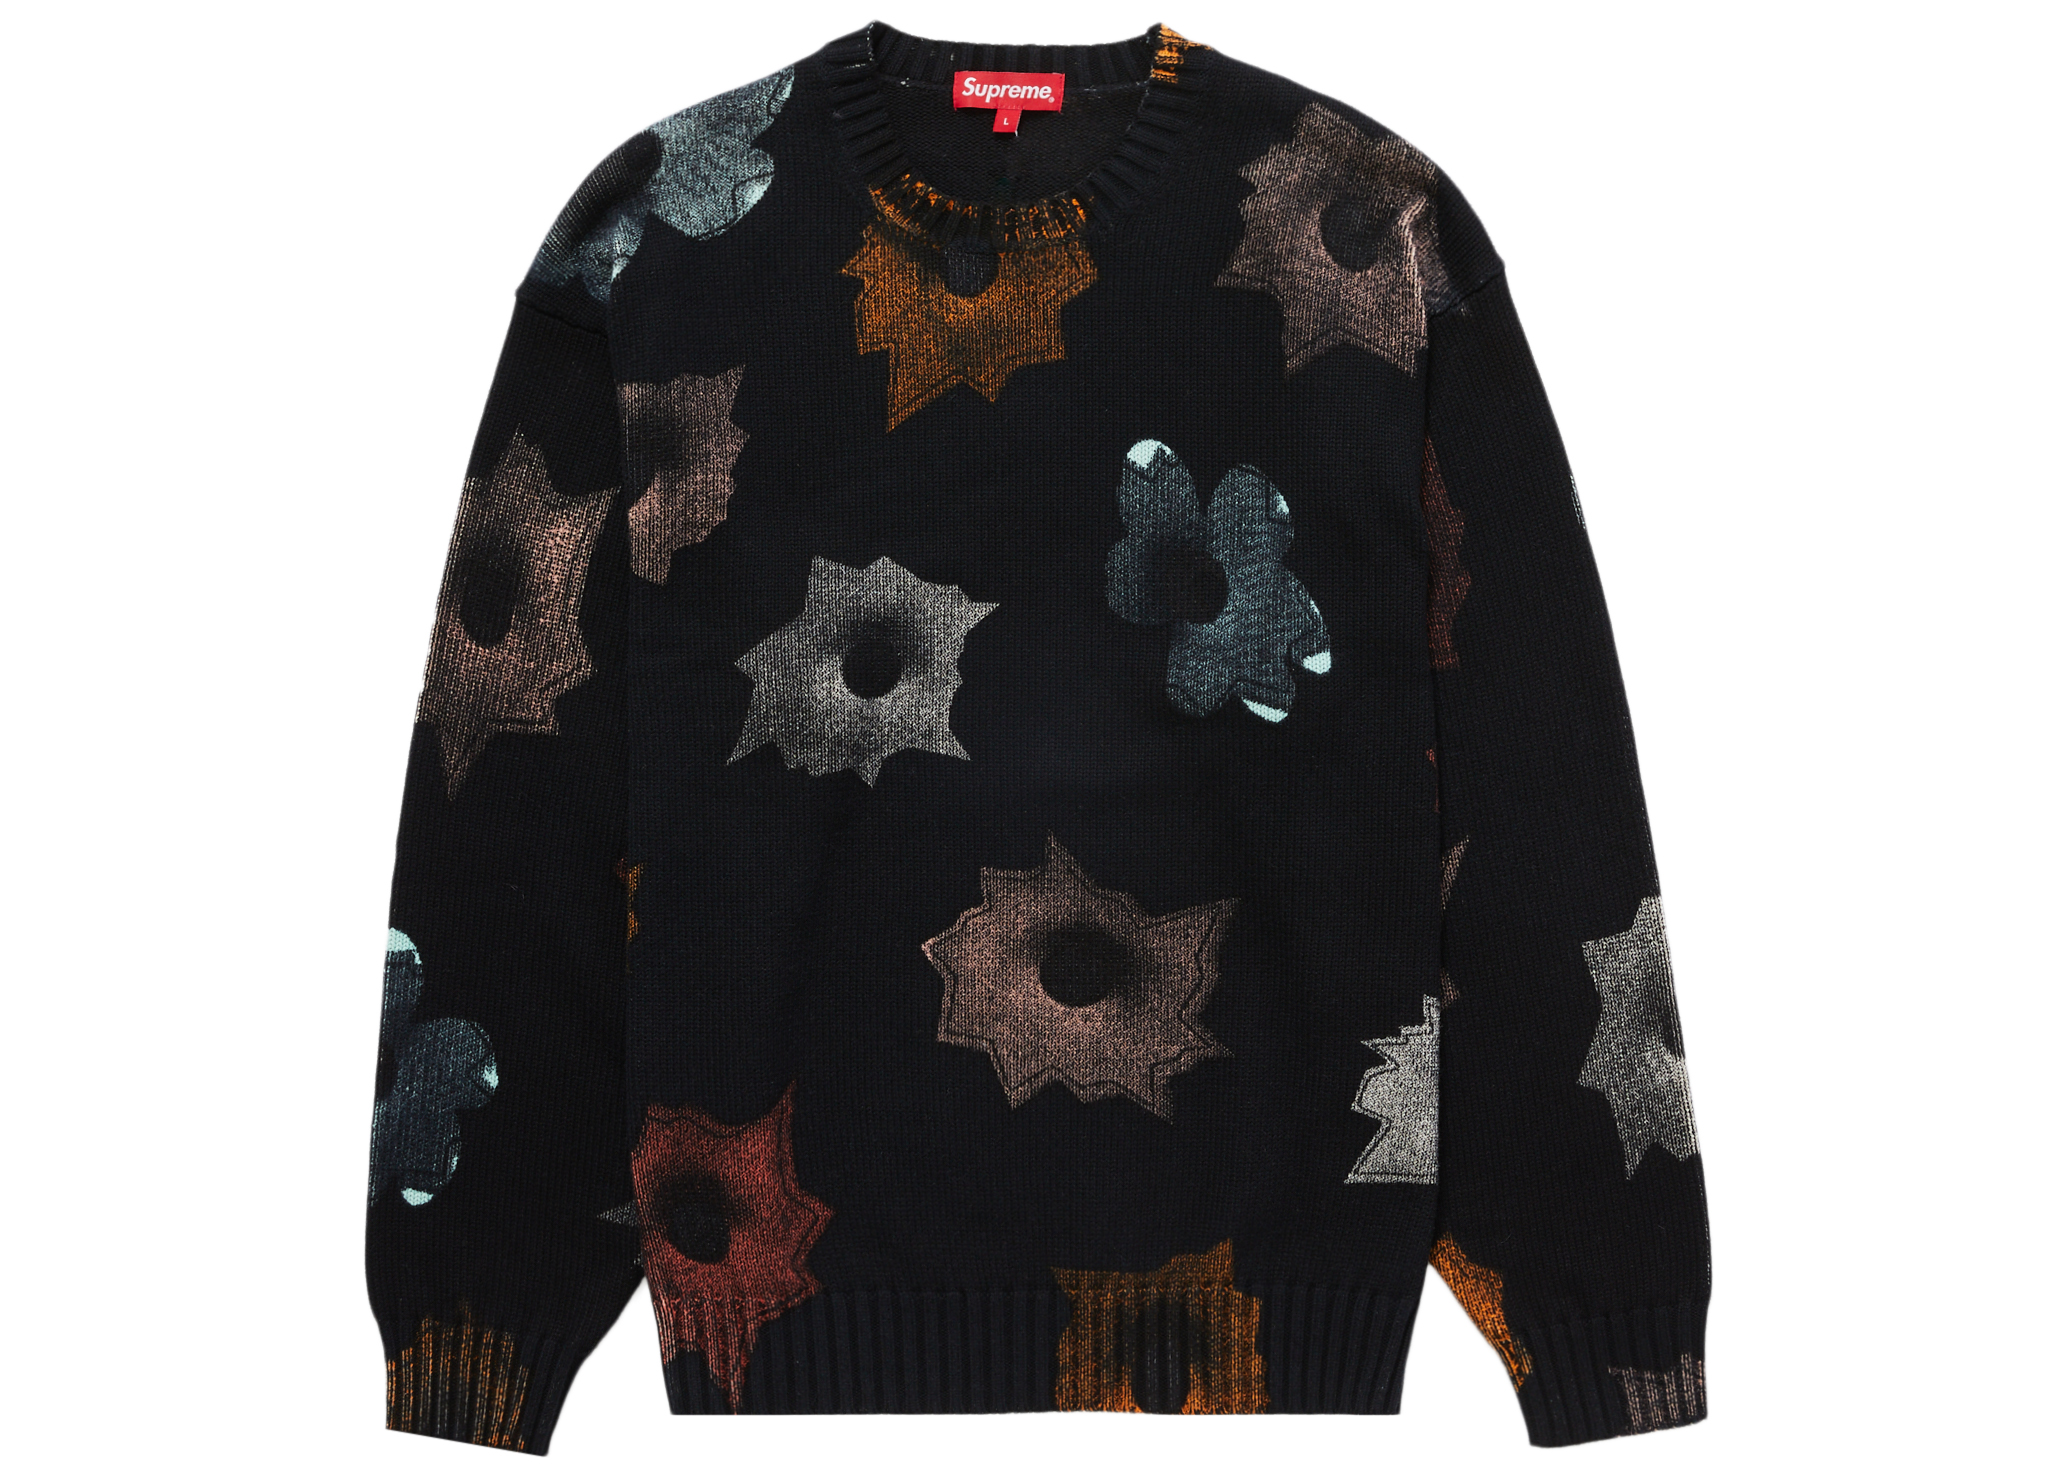 Supreme Nate Lowman Sweater XL 白